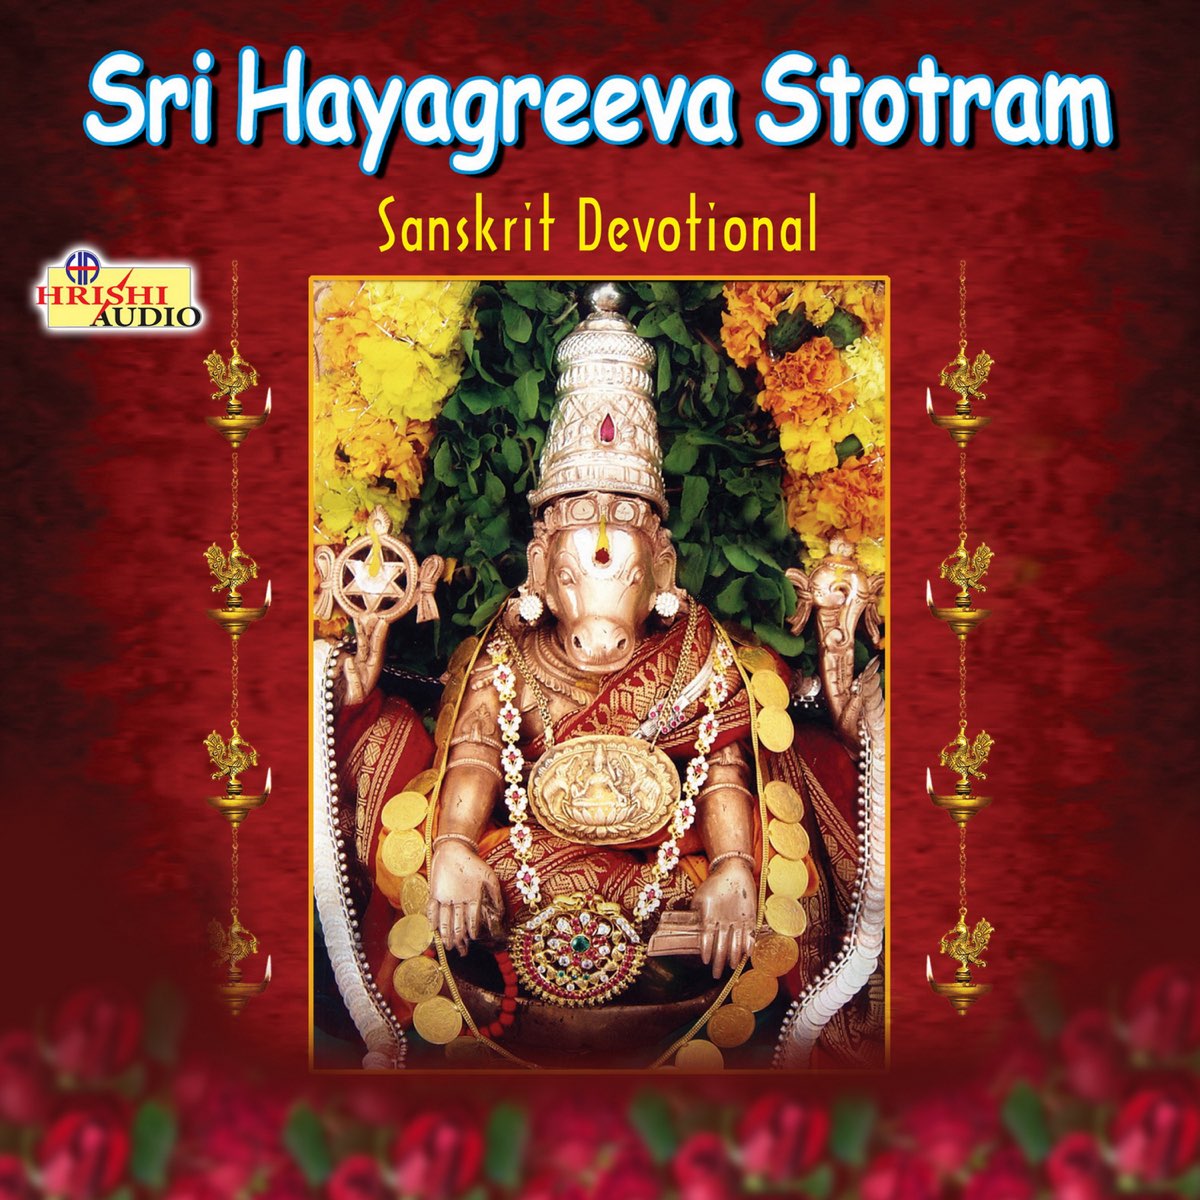 Sri Hayagreeva Stotram by K. S. Surekha on Apple Music